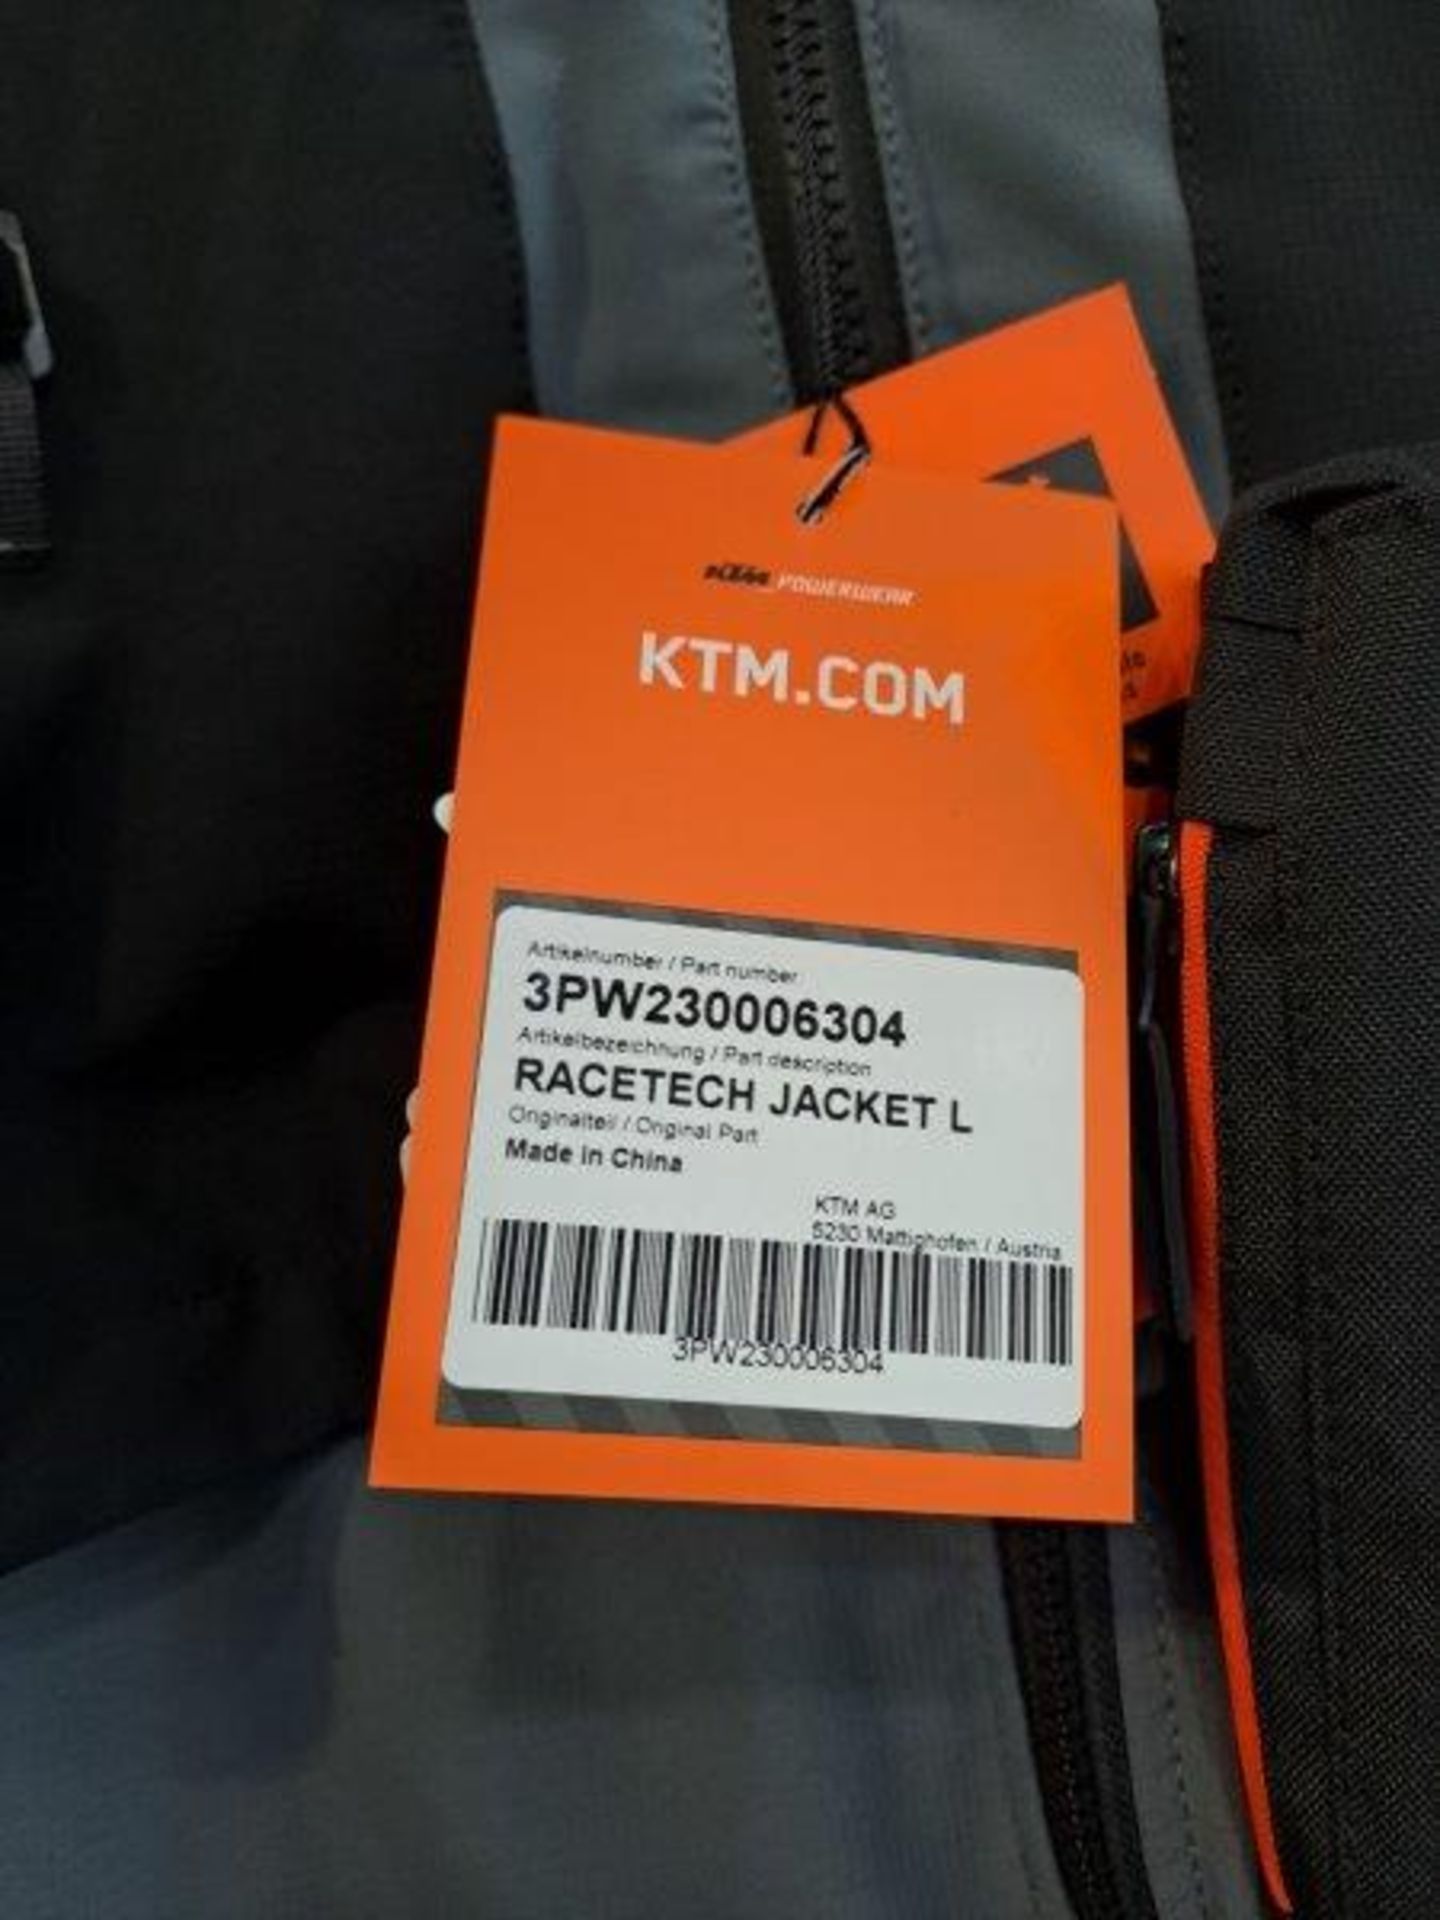 KTM Racetek L Motorbike Jacket - Image 4 of 8